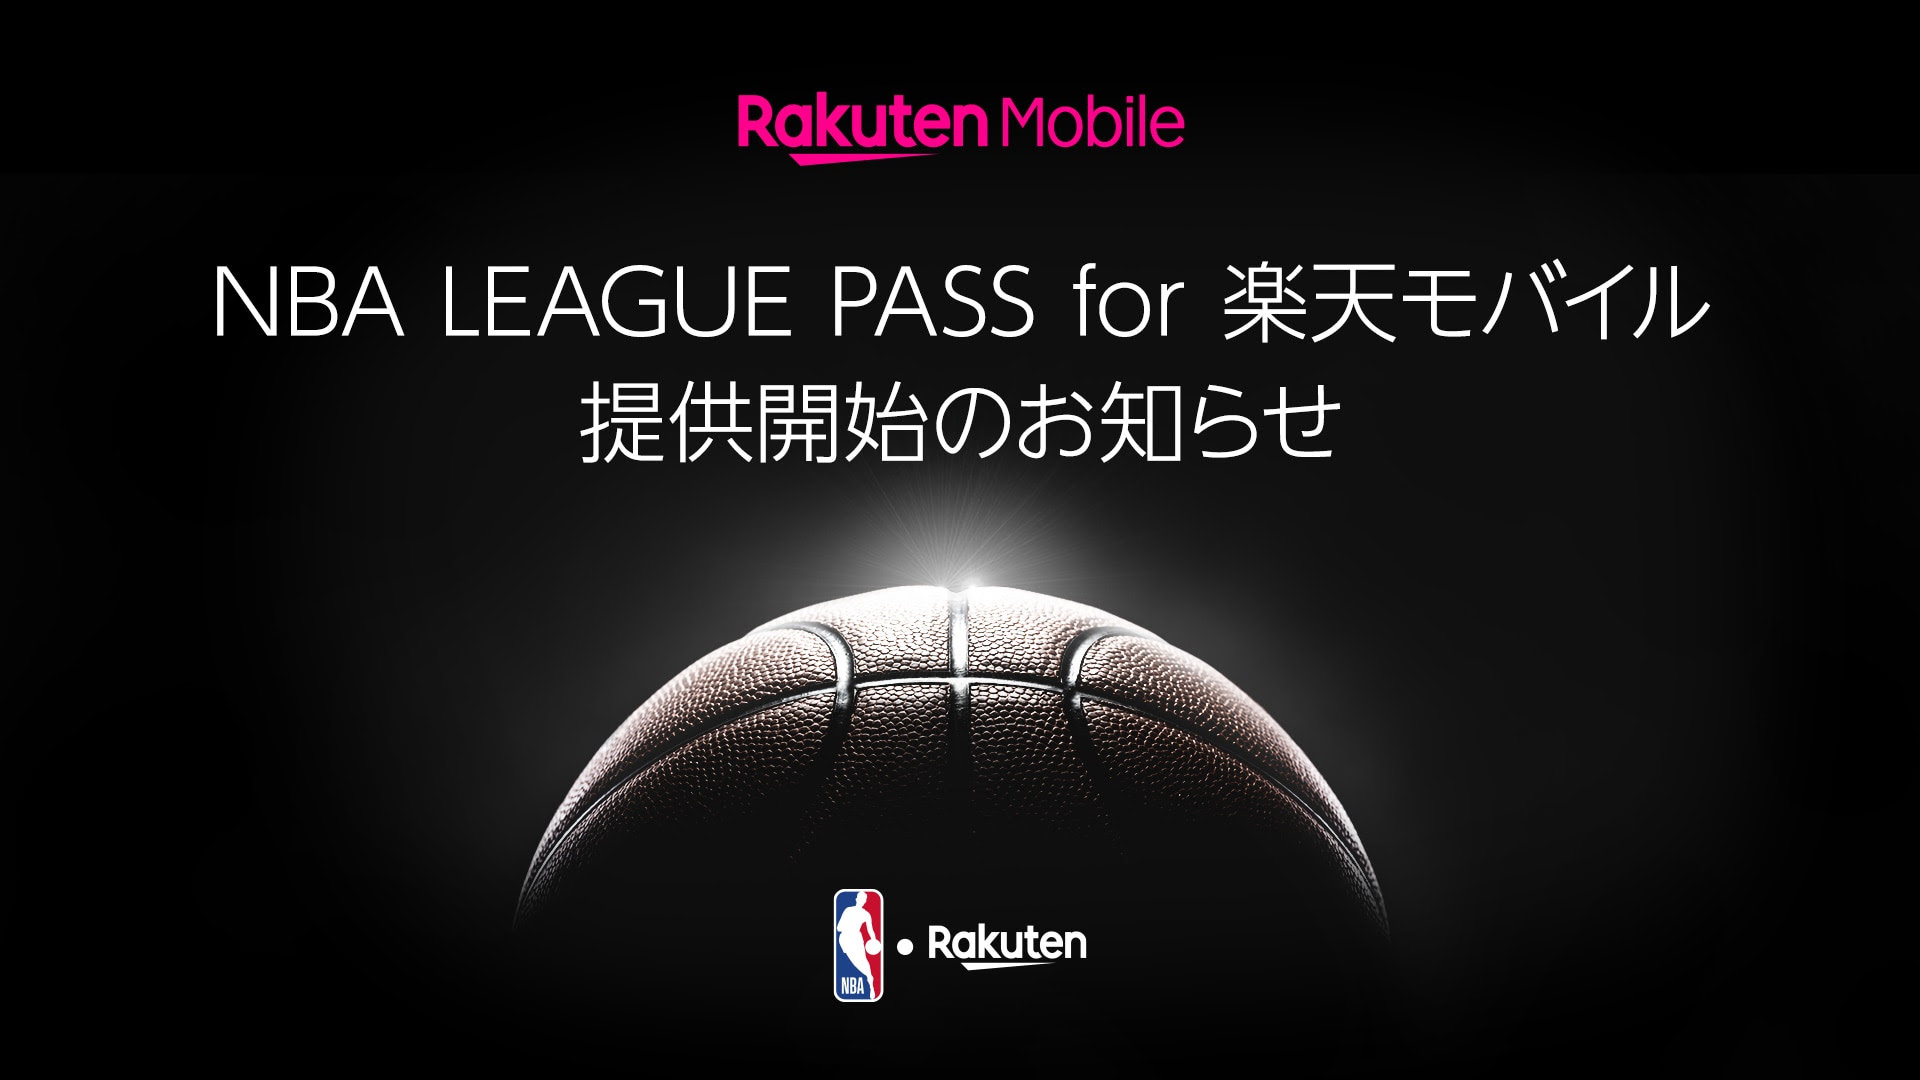 「NBA LEAGUE PASS for 楽天モバイル」提供開始、楽天モバイルのユーザーは NBA の試合が見放題